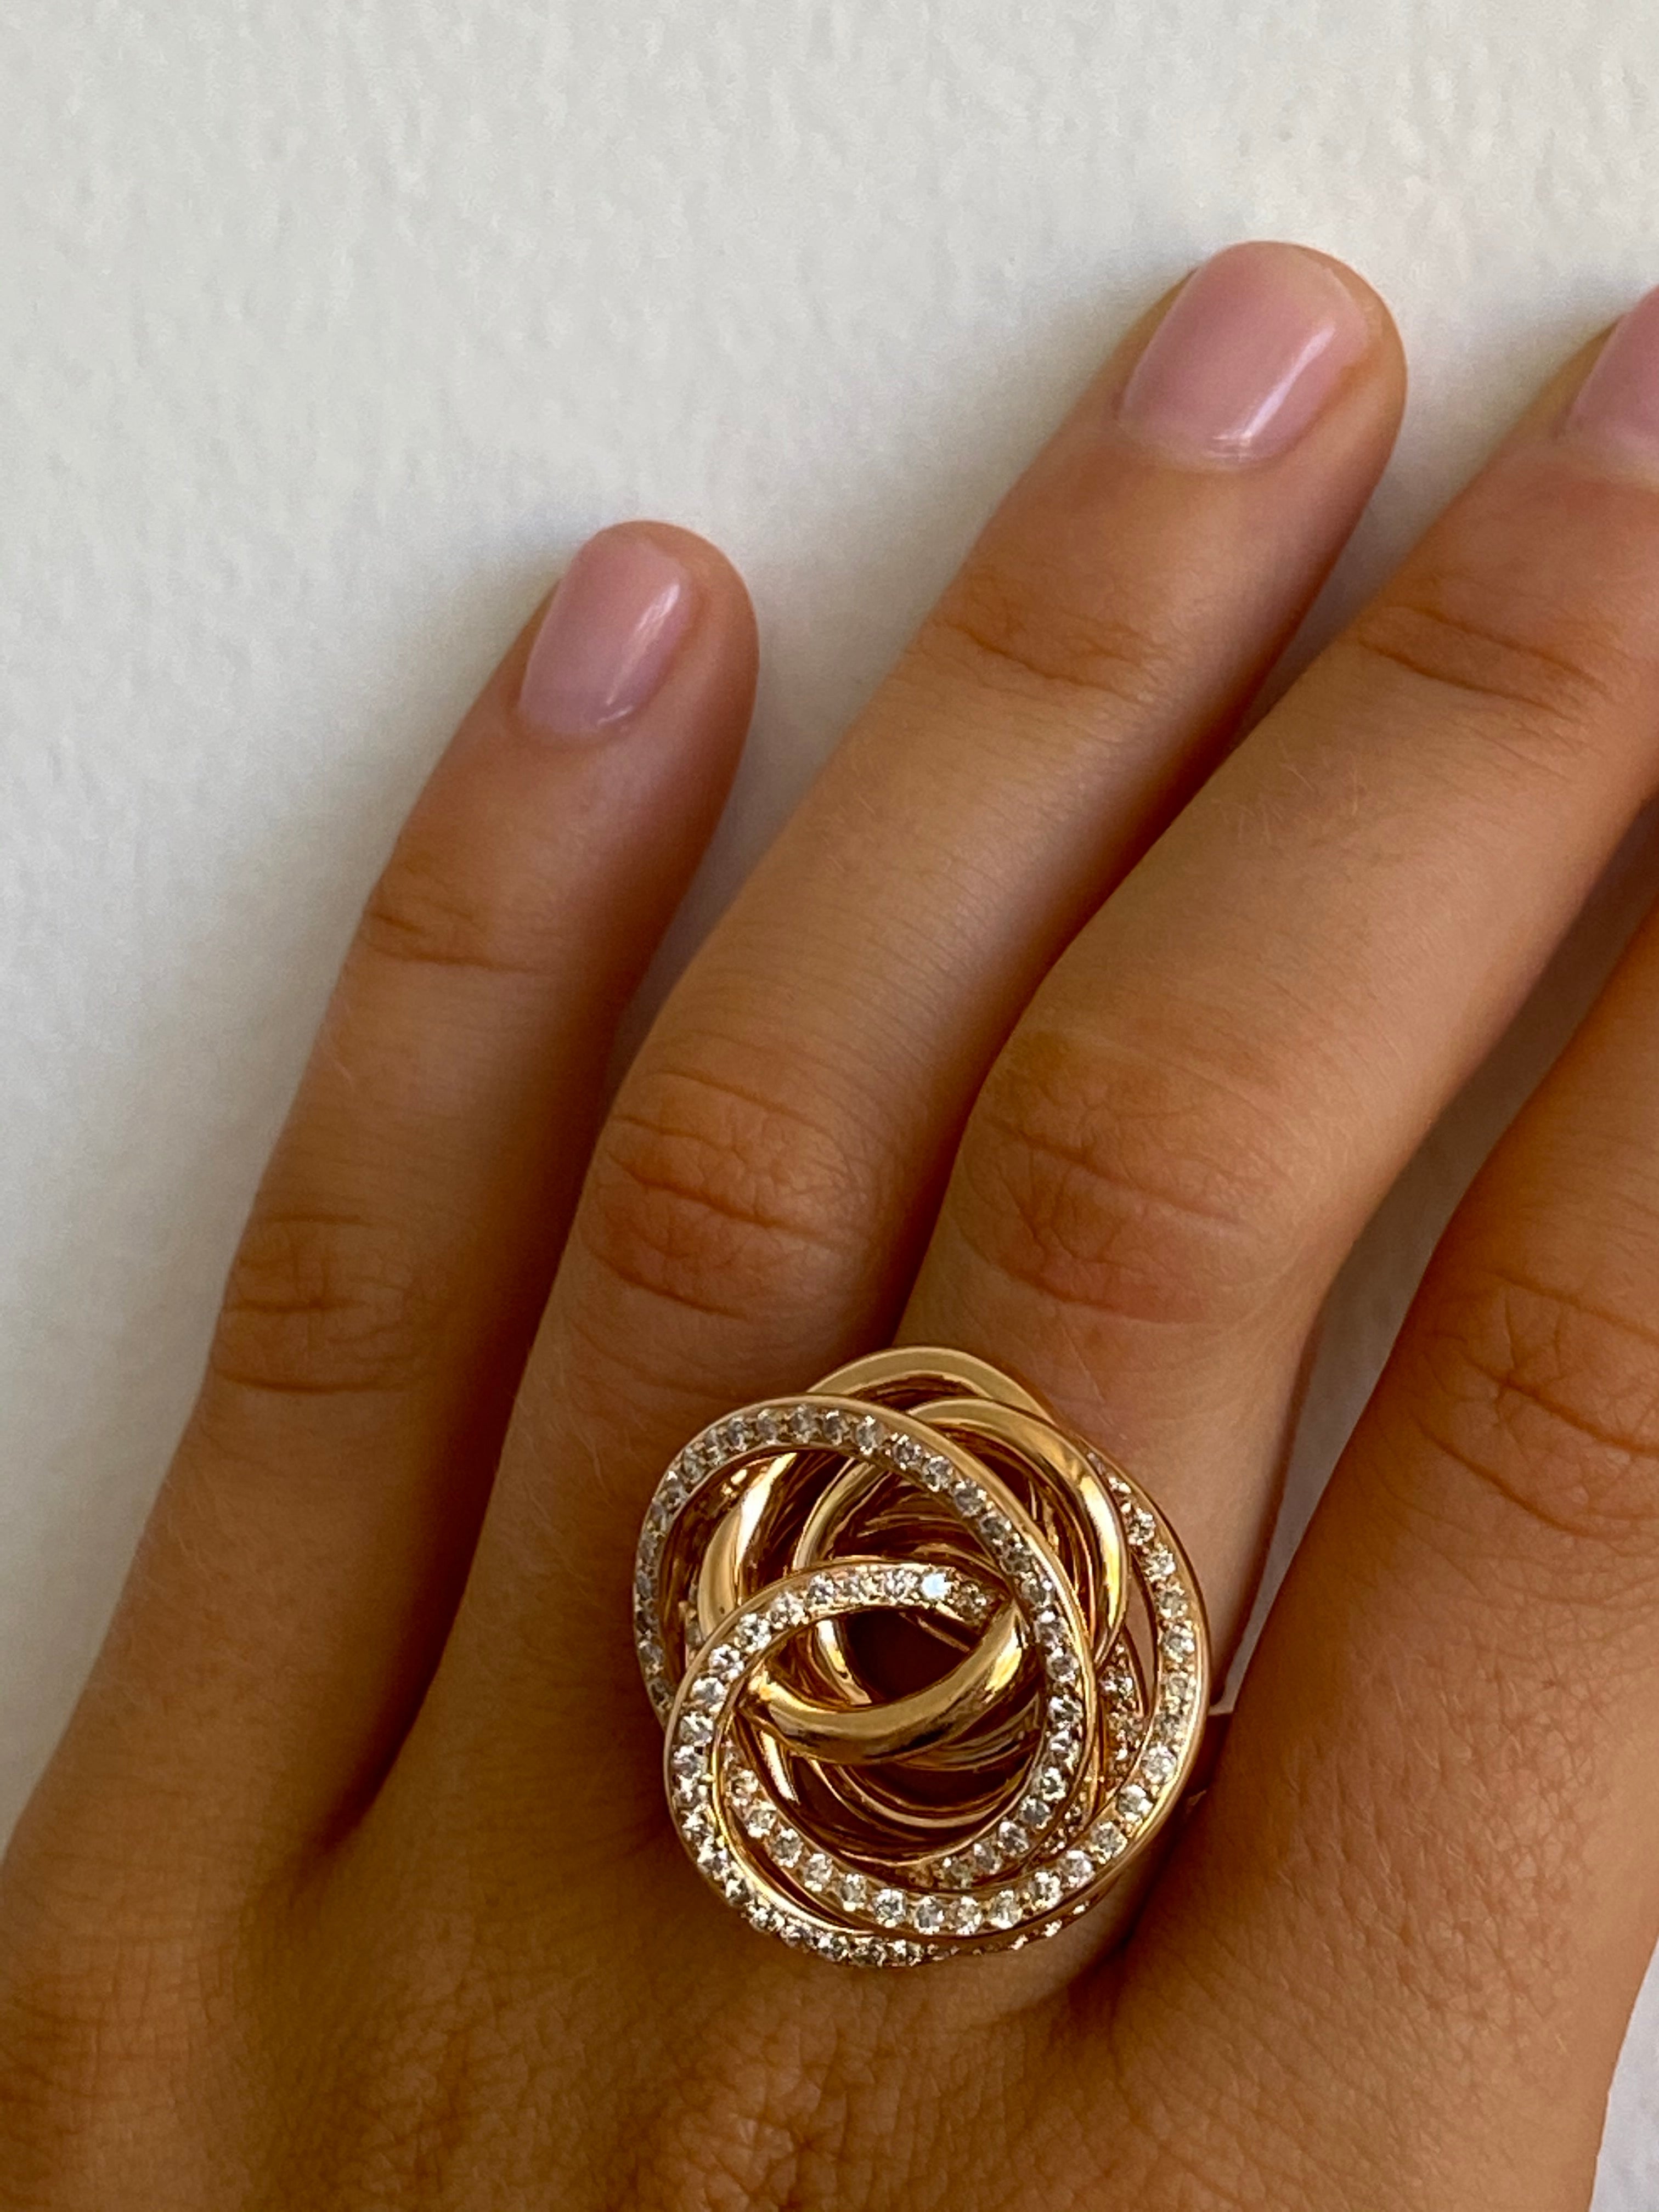 Rose Gold & Diamond Cocktail Ring